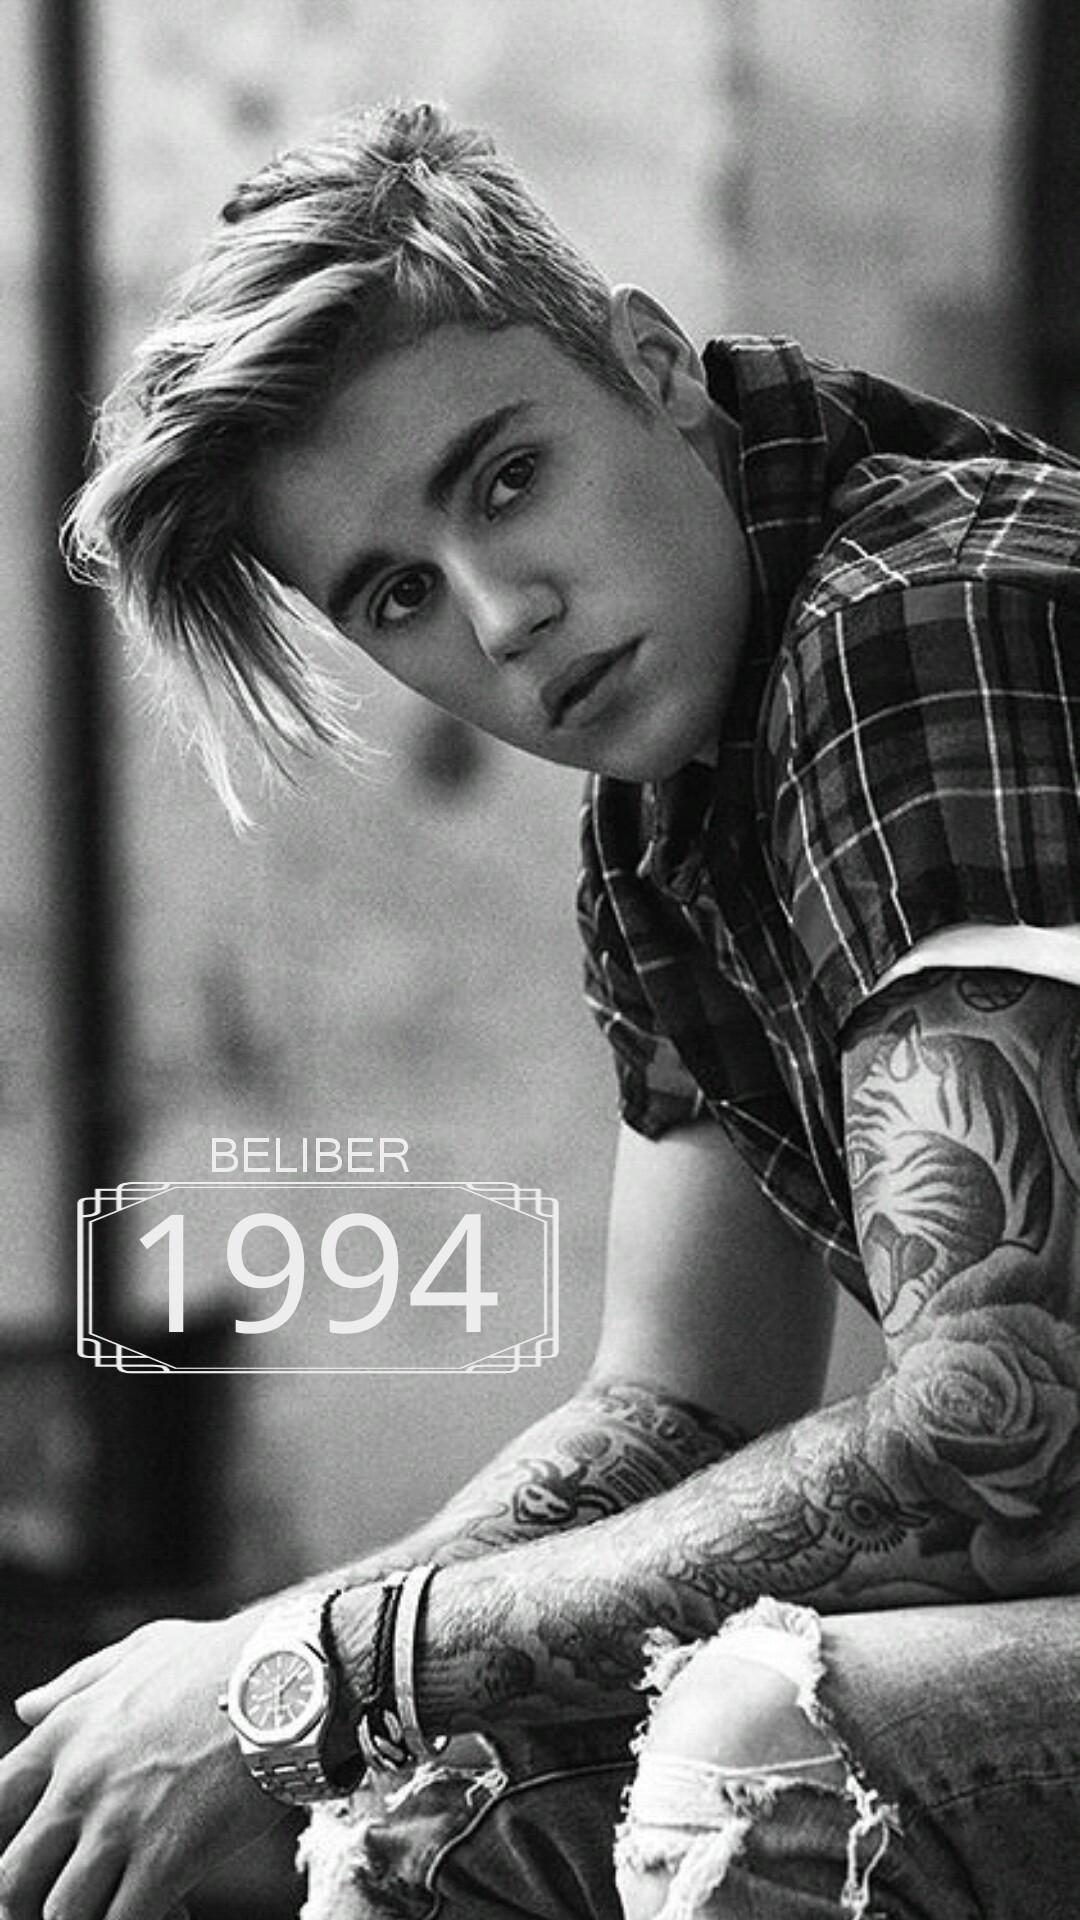 Justin Bieber Wallpaper Download High Quality HD Image of JB